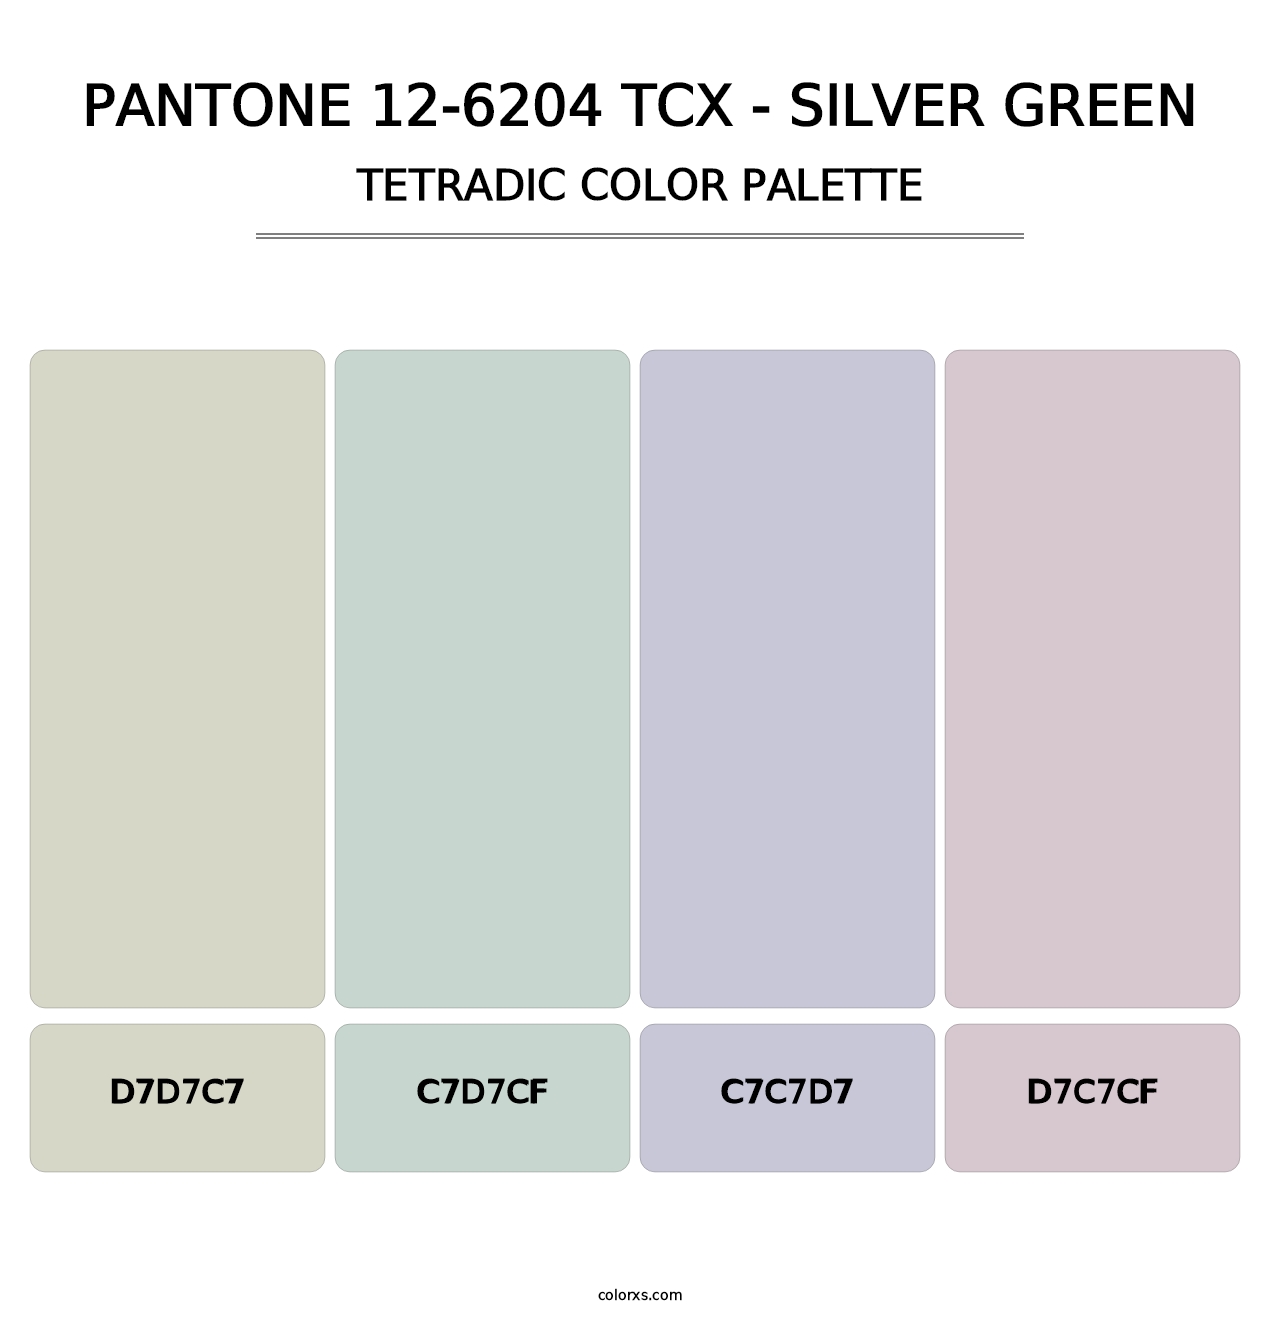 PANTONE 12-6204 TCX - Silver Green - Tetradic Color Palette